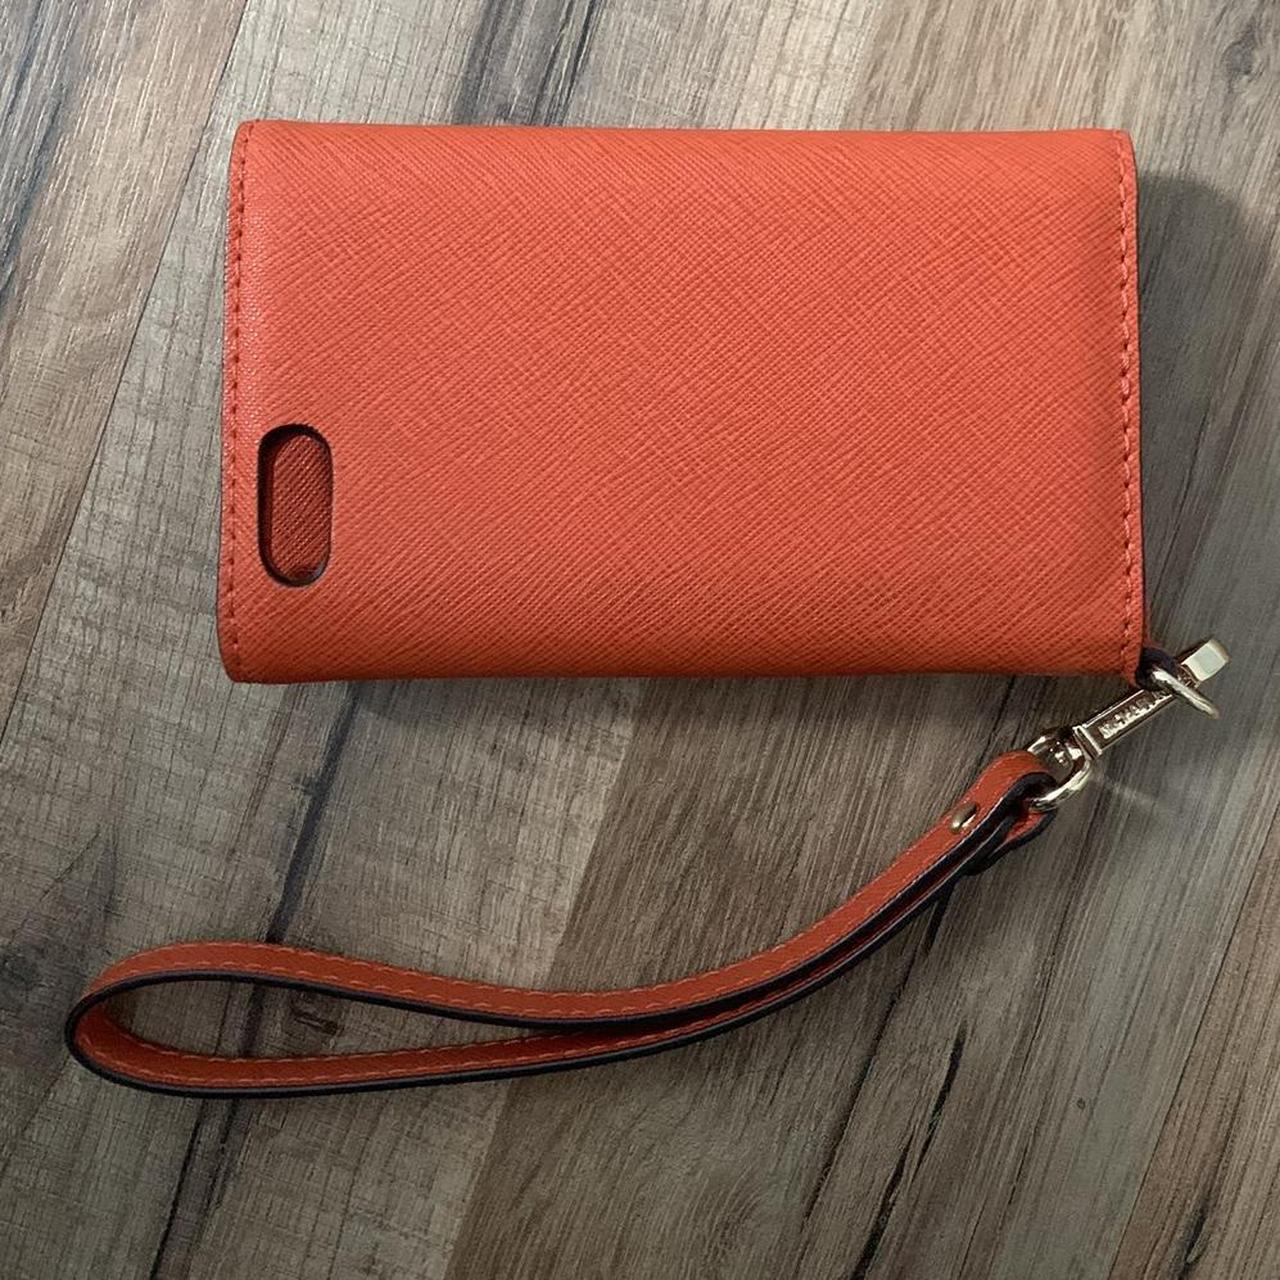 Michael kors phone case wallet Red leather wallet - Depop